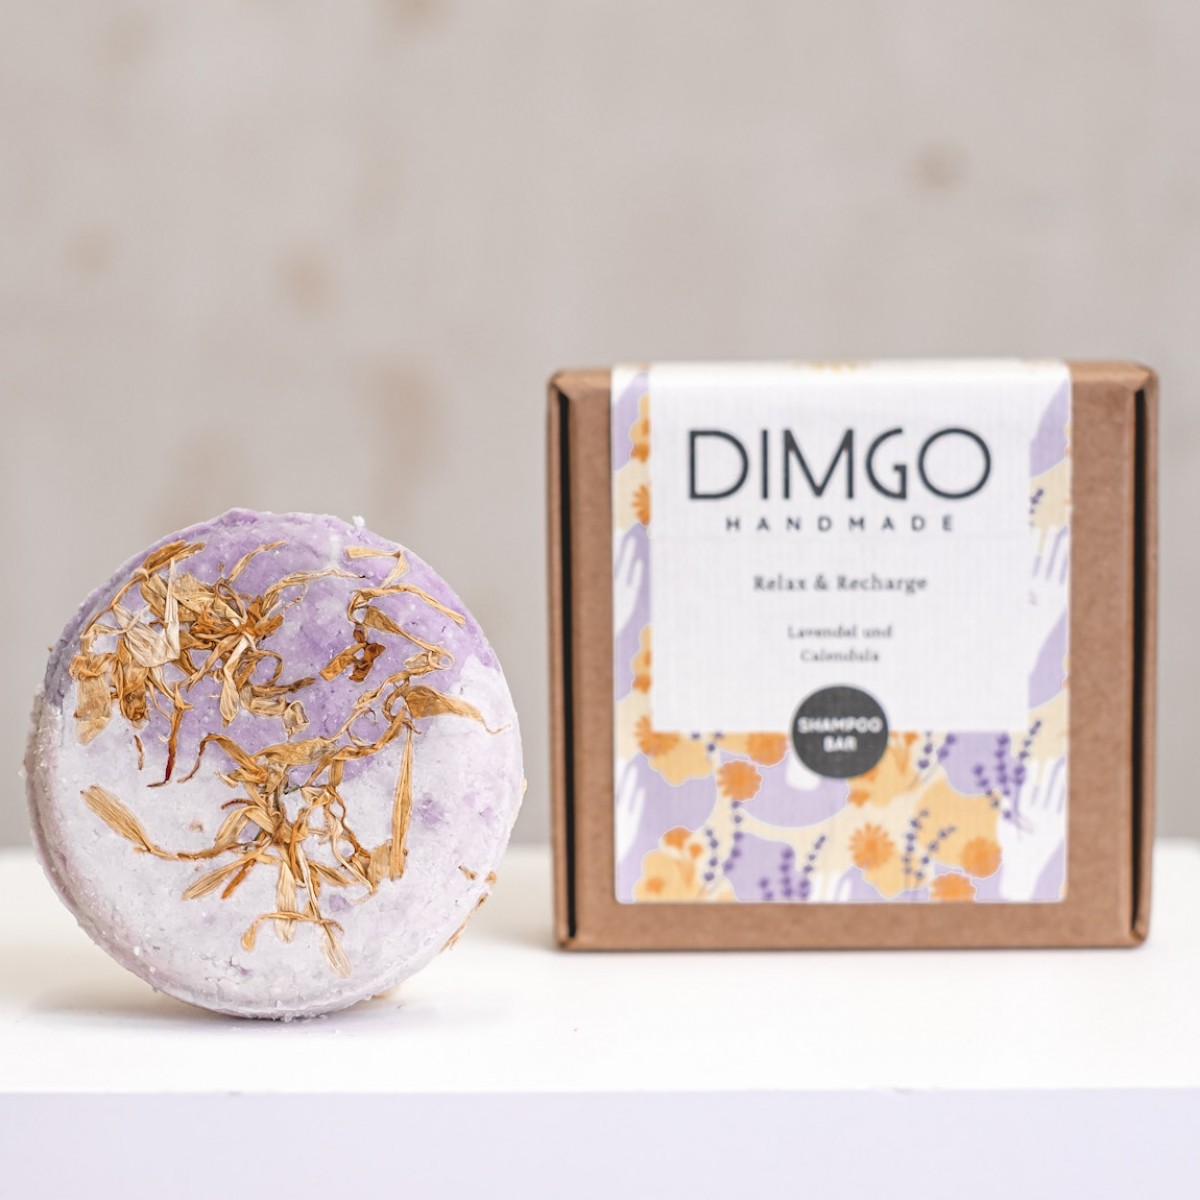 DIMGO - Shampoobar 60g - Relax & Recharge